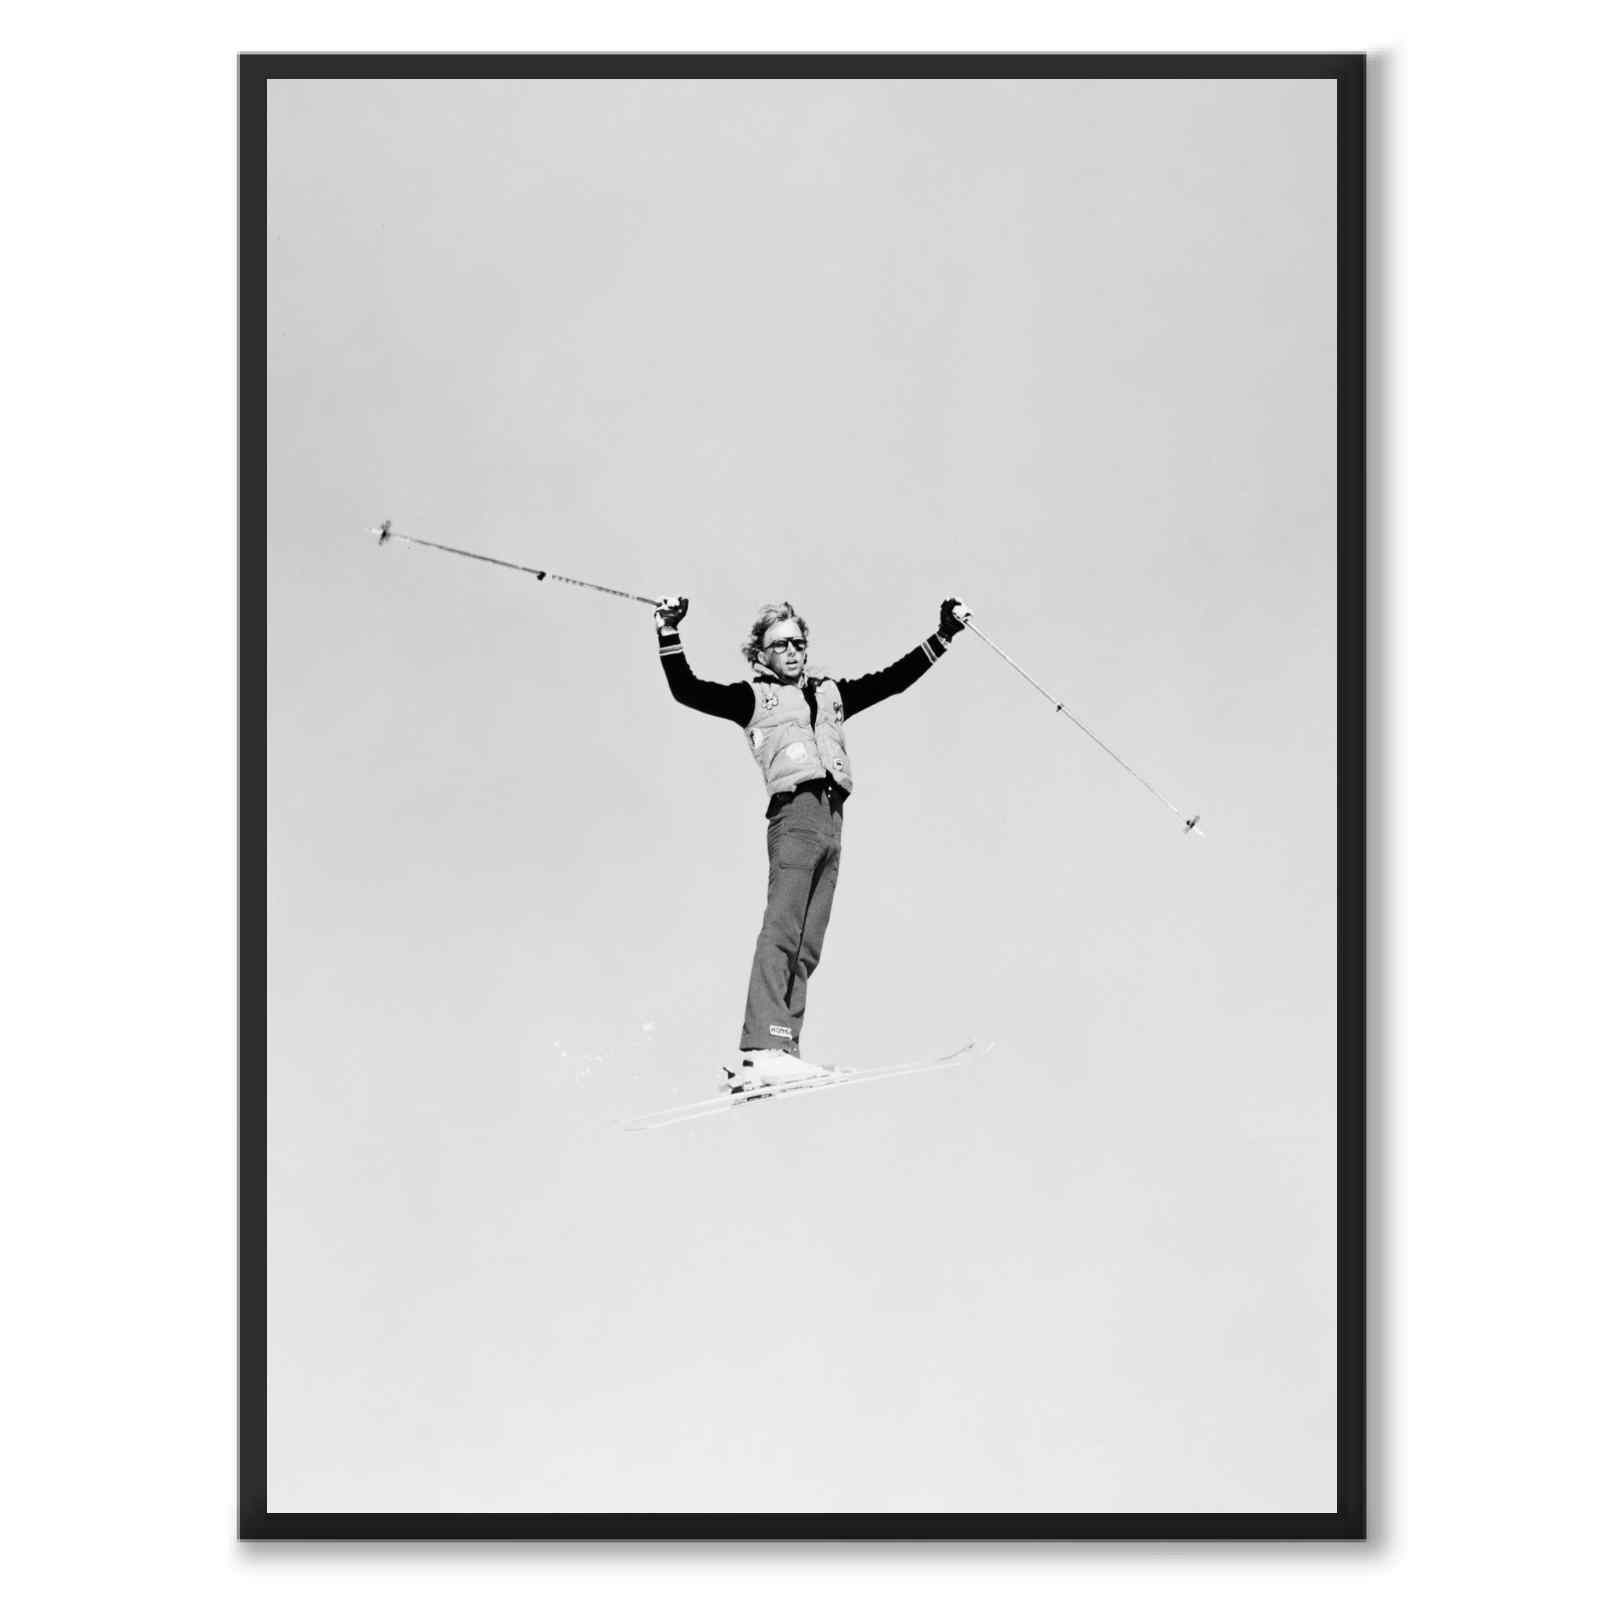 70-tallet på ski